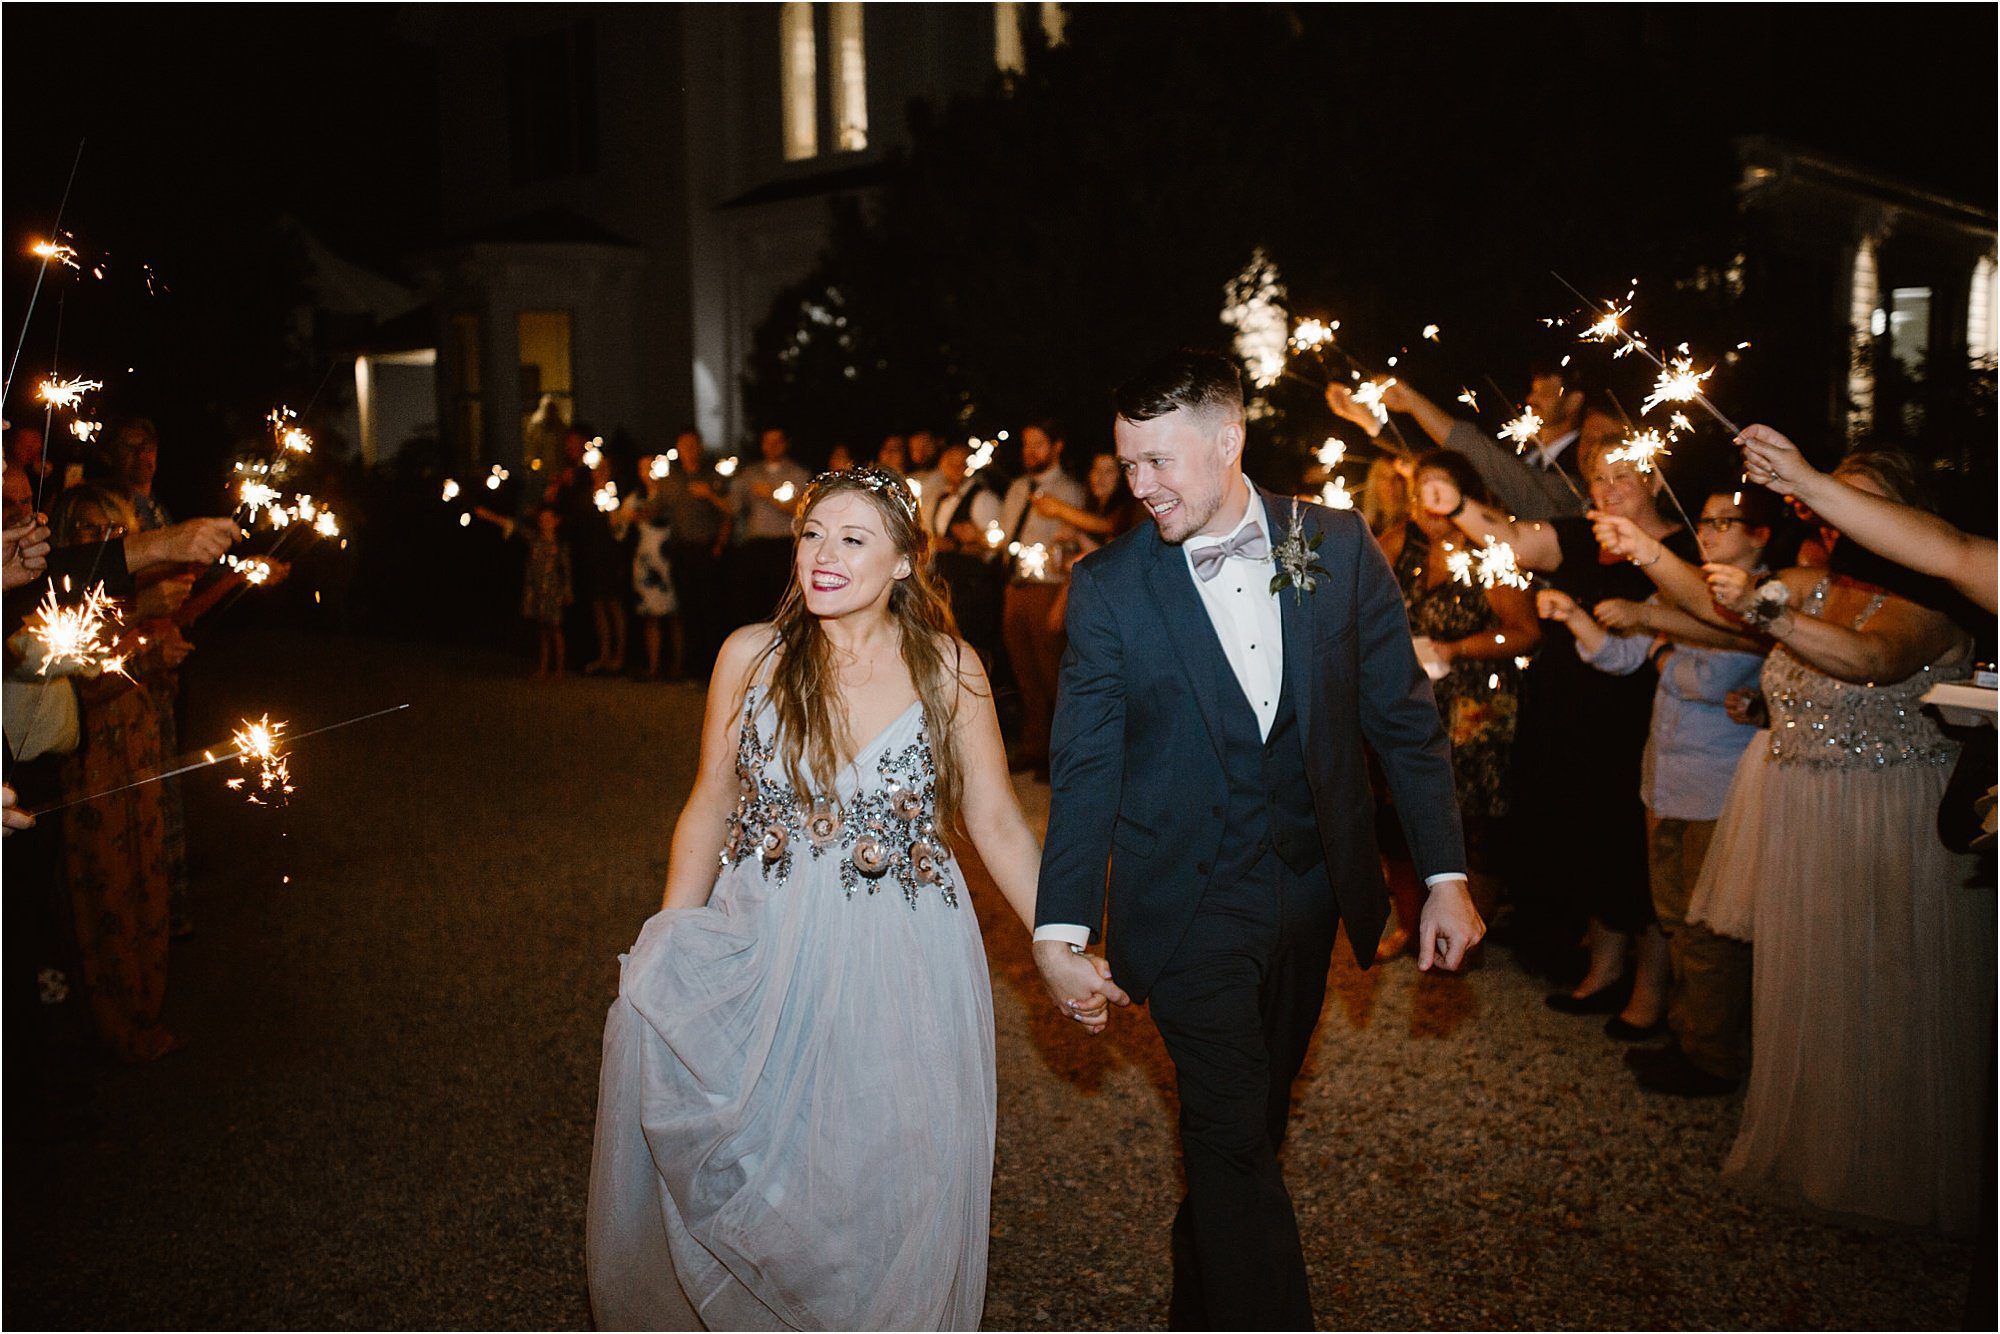 sparkler exit on wedding day